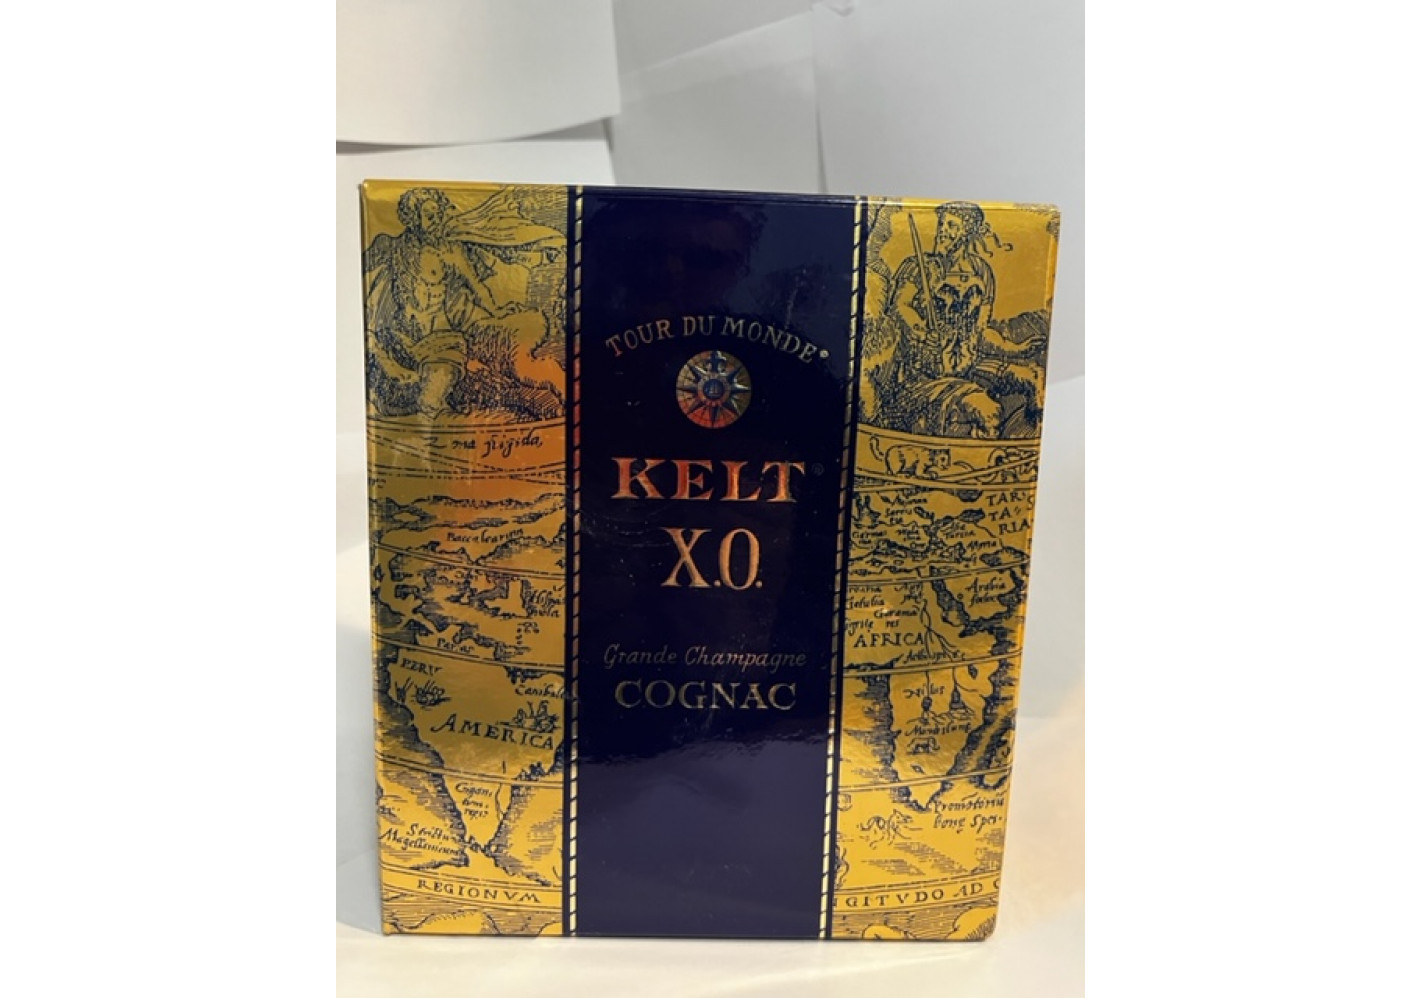 Kelt Tour du Monde X.O. Grande Champagne Cognac - 750ml